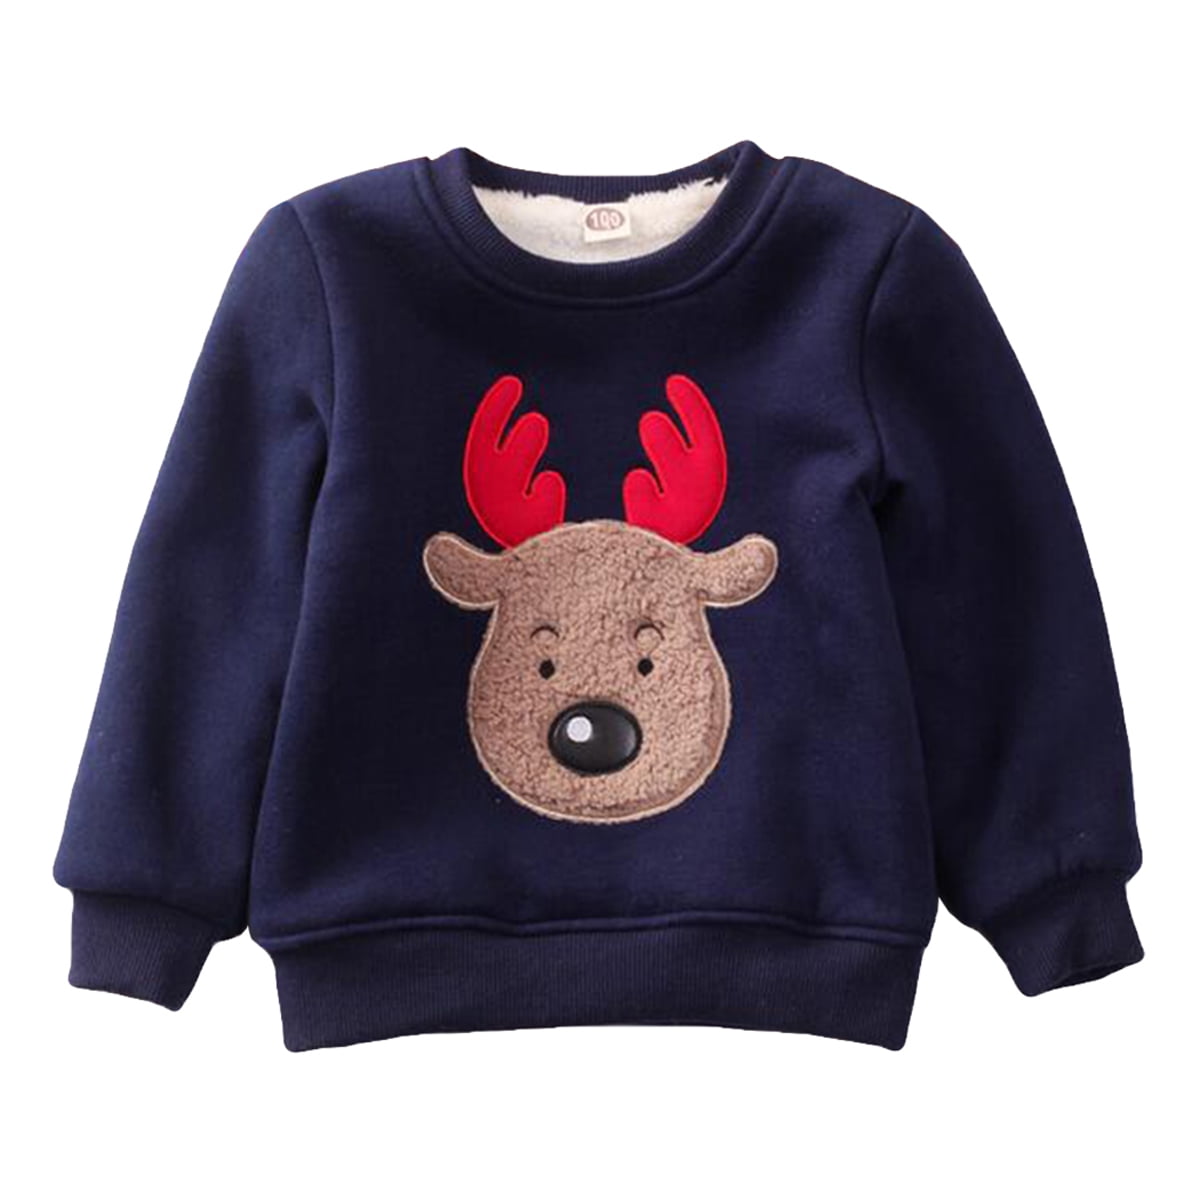 Natashas Christmas Jumper Sweatshirt Fleece Pullover Long Sleeve Tops Winter Sweater Toddler T-Shirt Clothes Kids Age 1 2 3 4 5 6 7 Years 